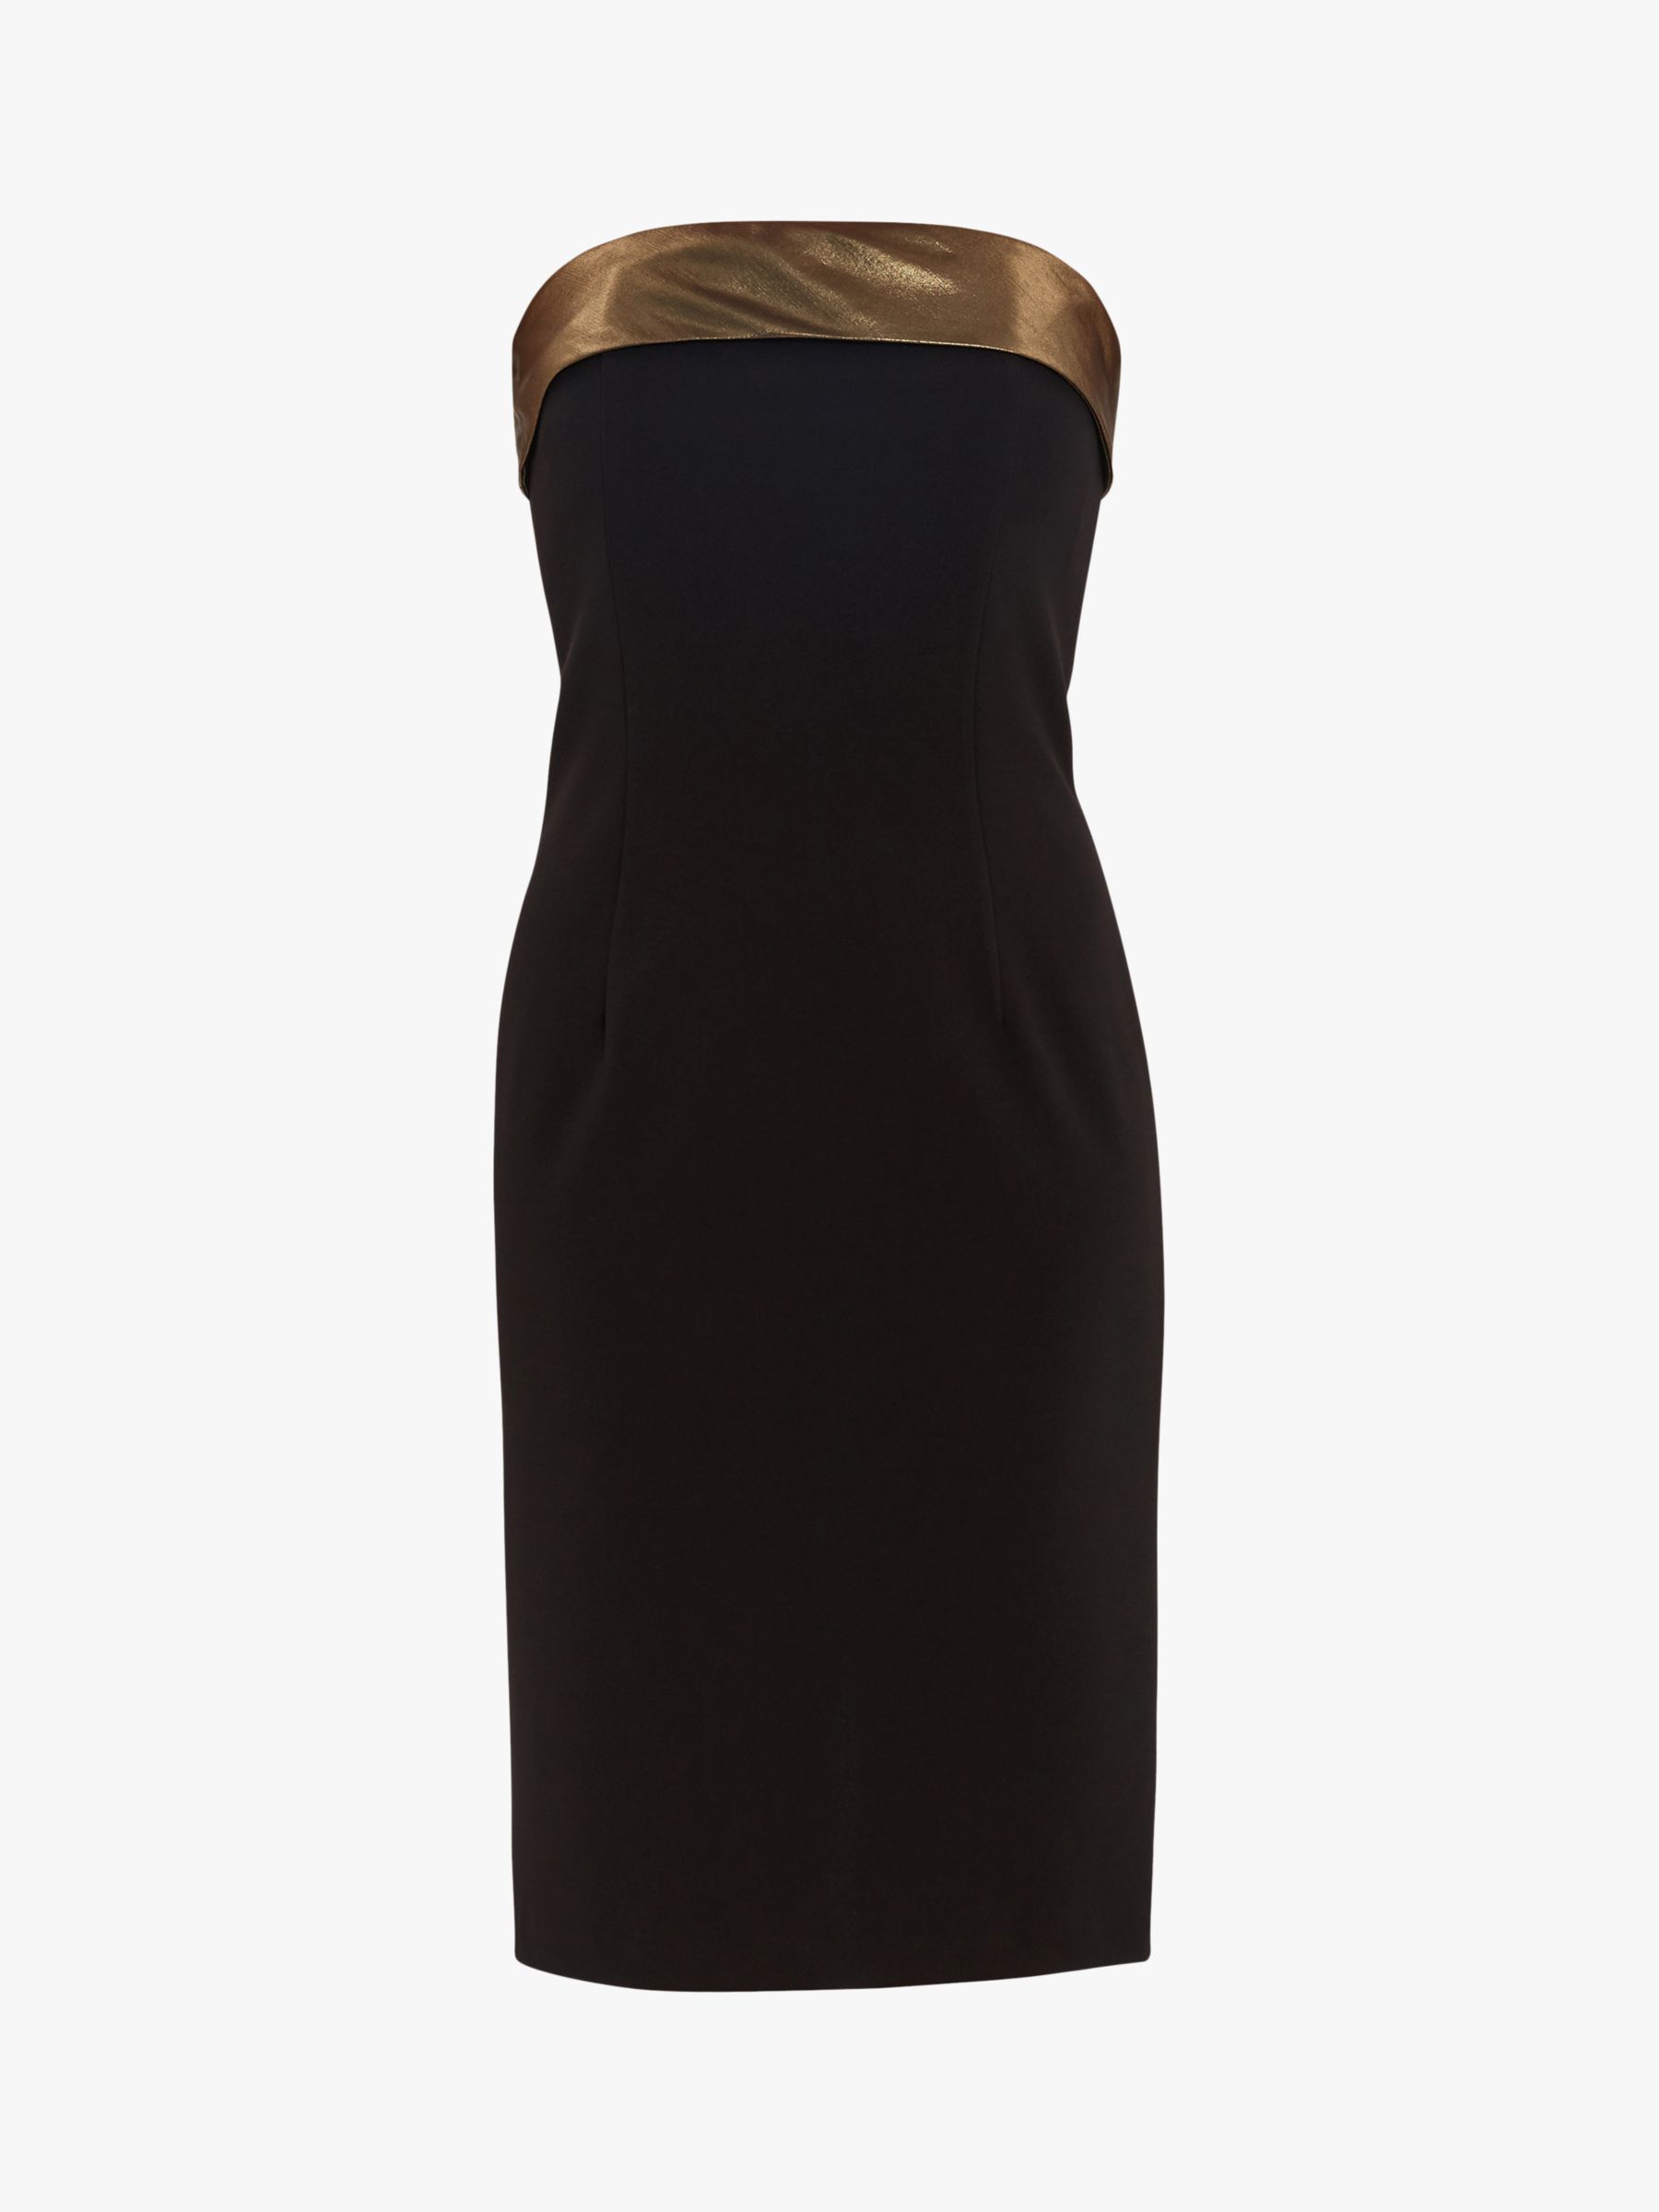 Buy Gina Bacconi Gracella Chiffon Dress, Black/Gold Online at johnlewis.com